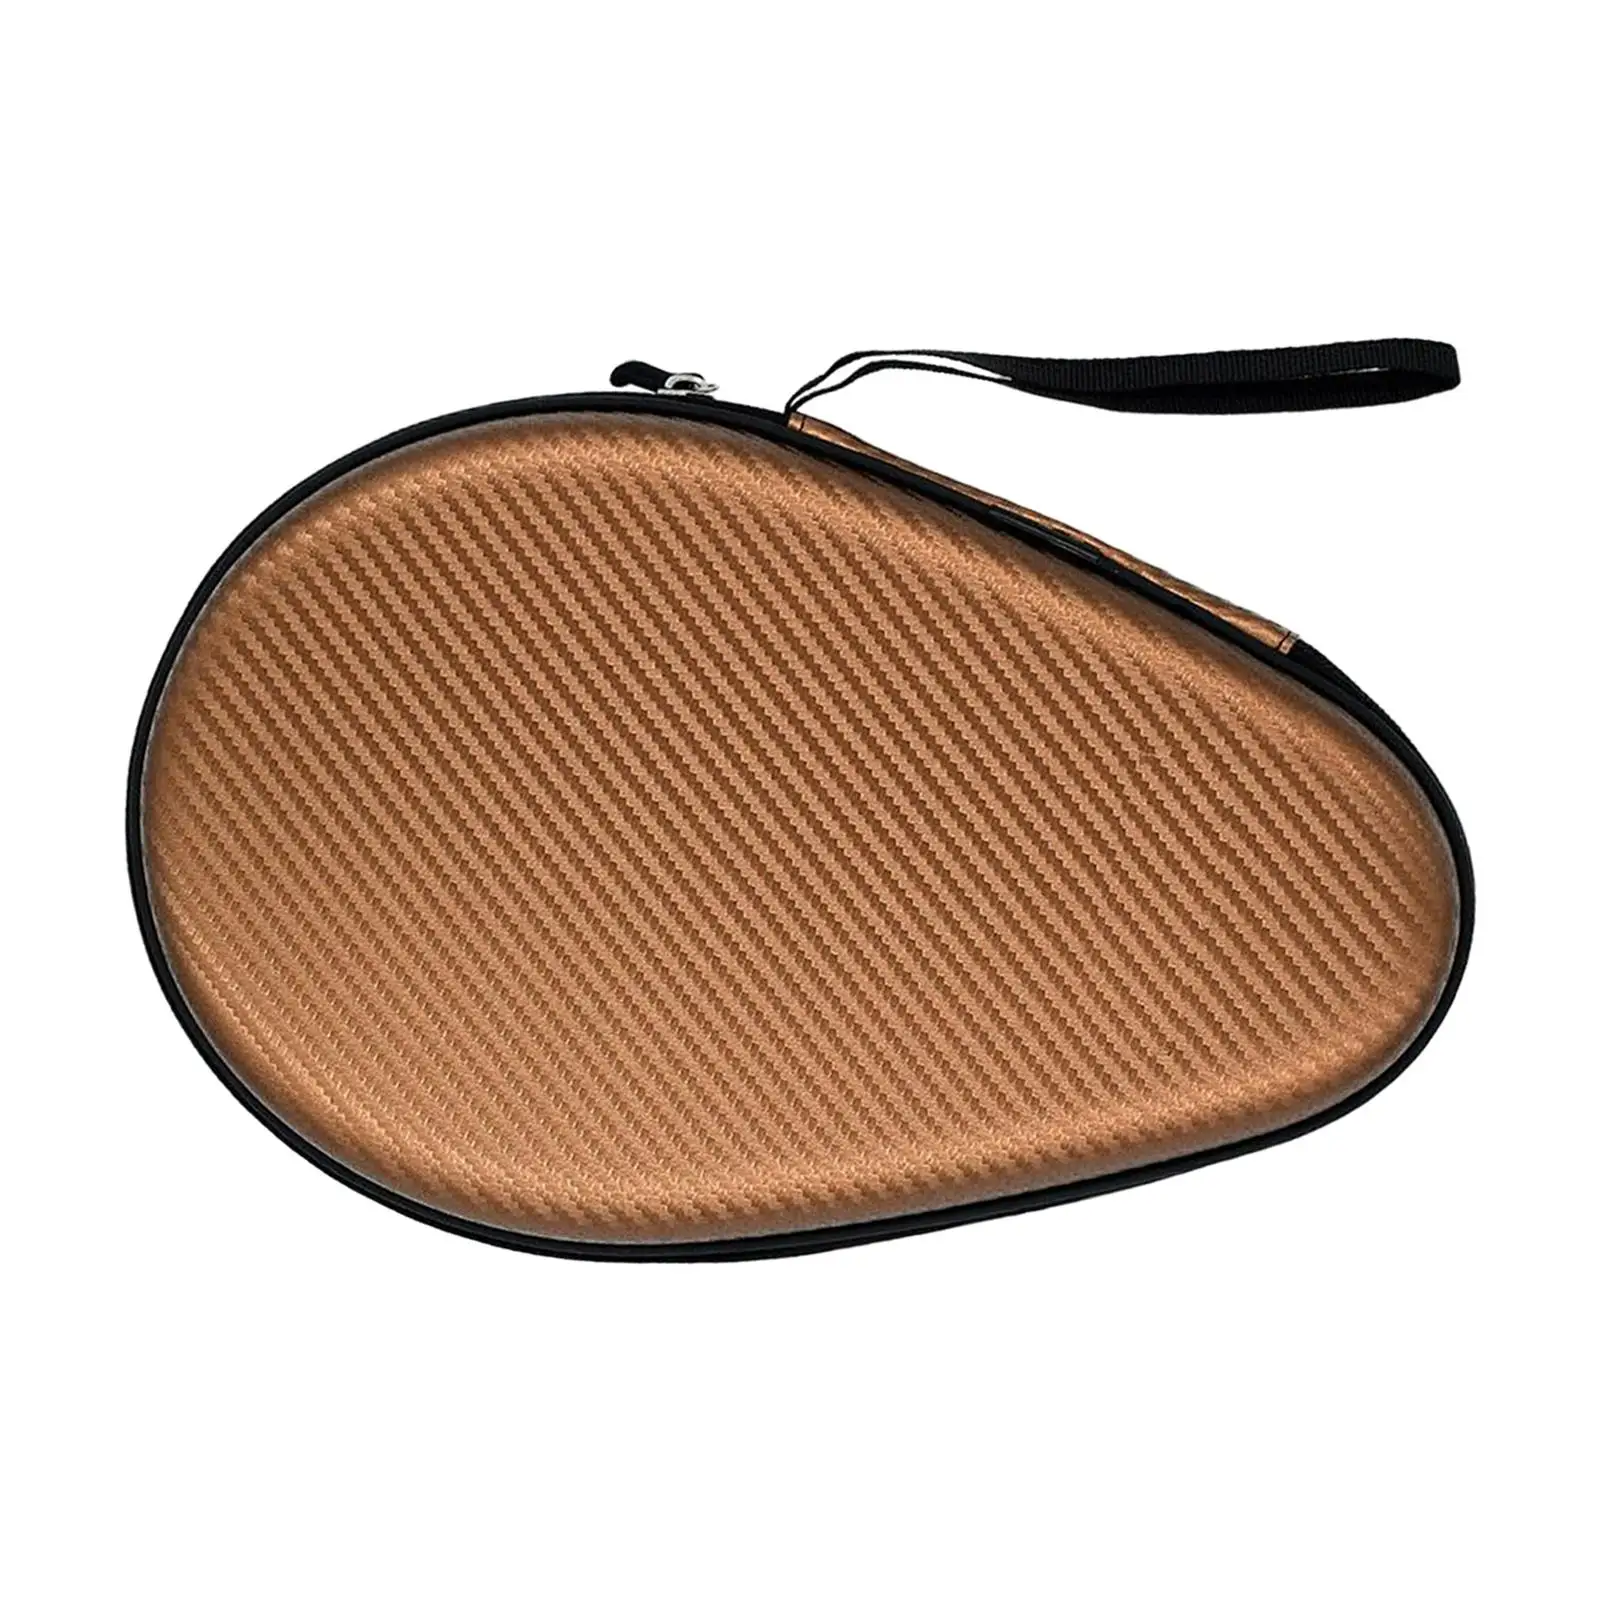 Portable Table Tennis Racket Bag EVA with Zipper for Outdoor Travel Indoor